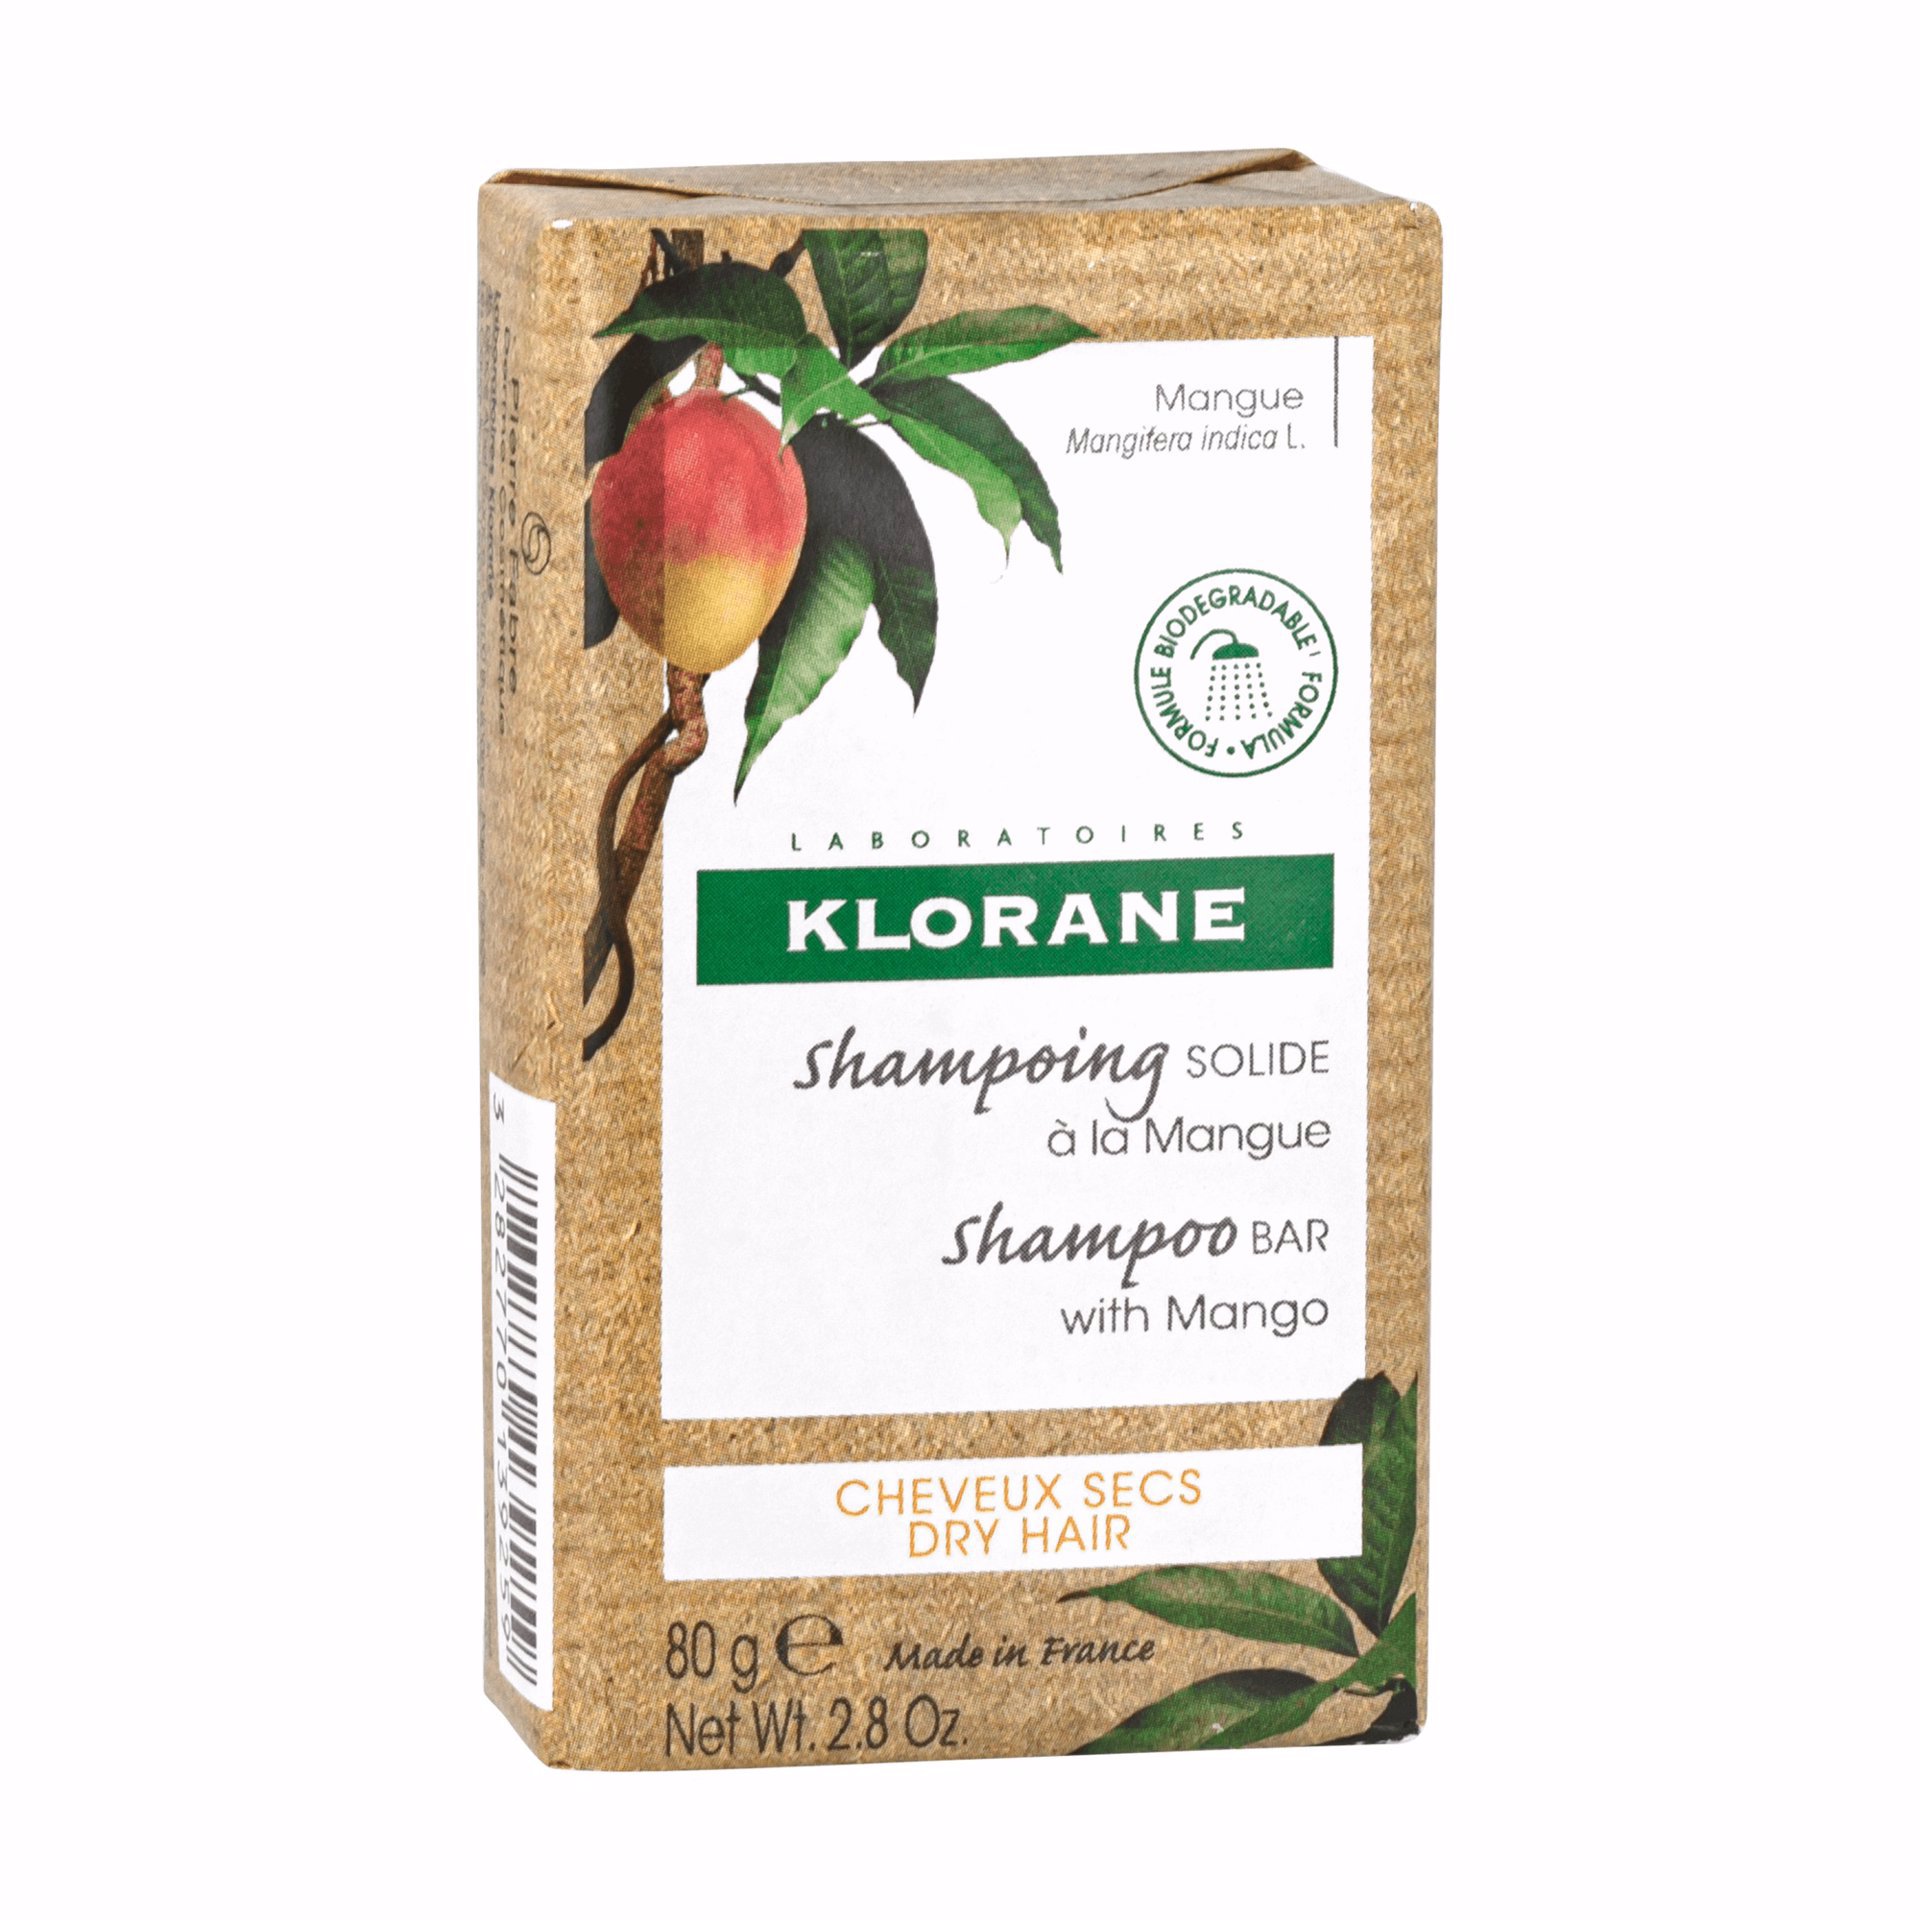 Nuevo champú sólido de mango de Klorane